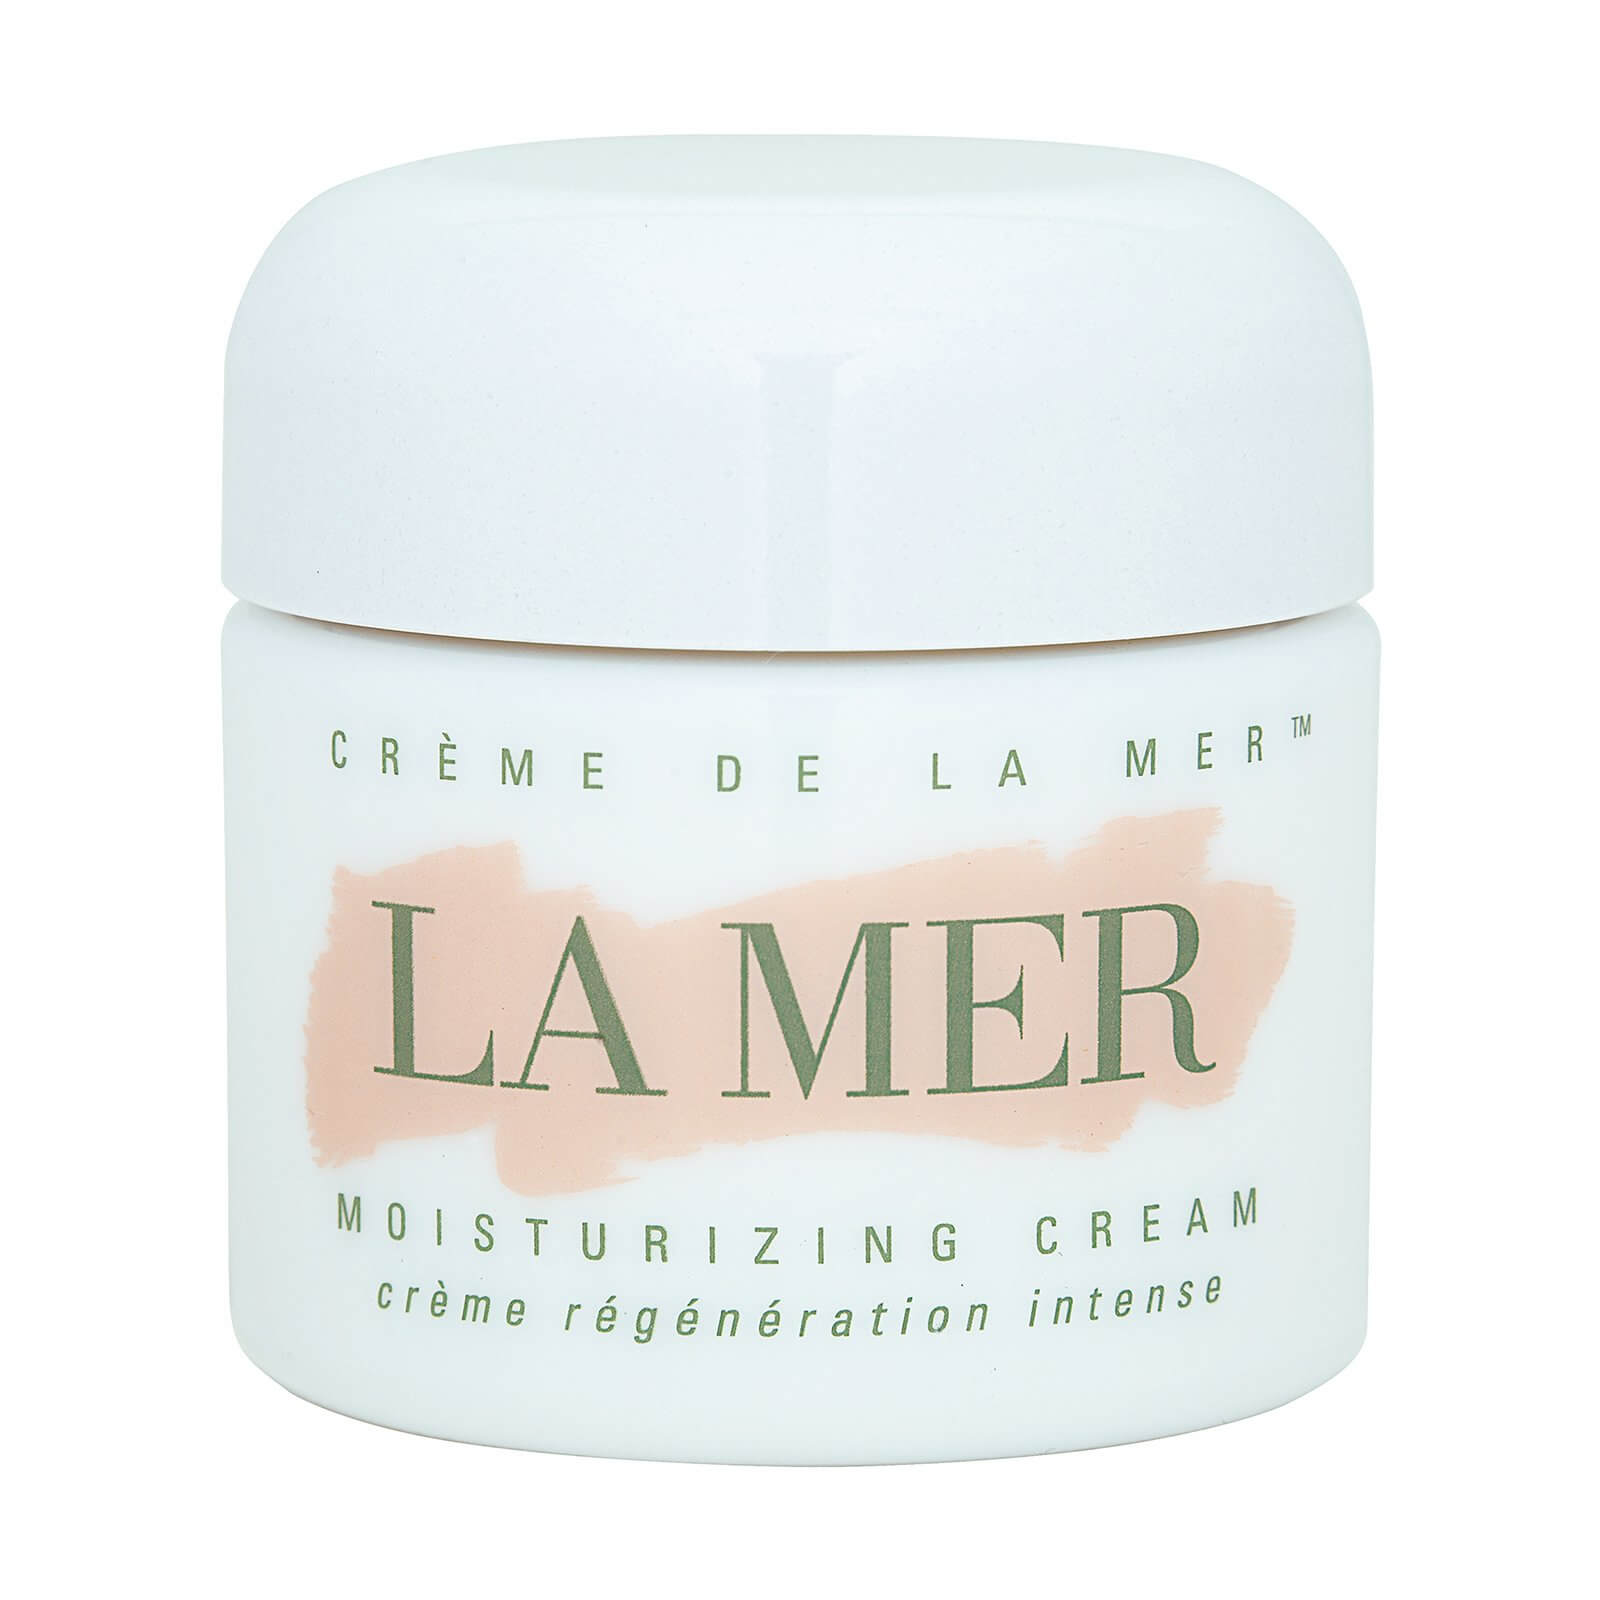 Chanel Sublimage La Creme Lumiere Ultimate Regeneration & Brightening Cream  /1.7 oz